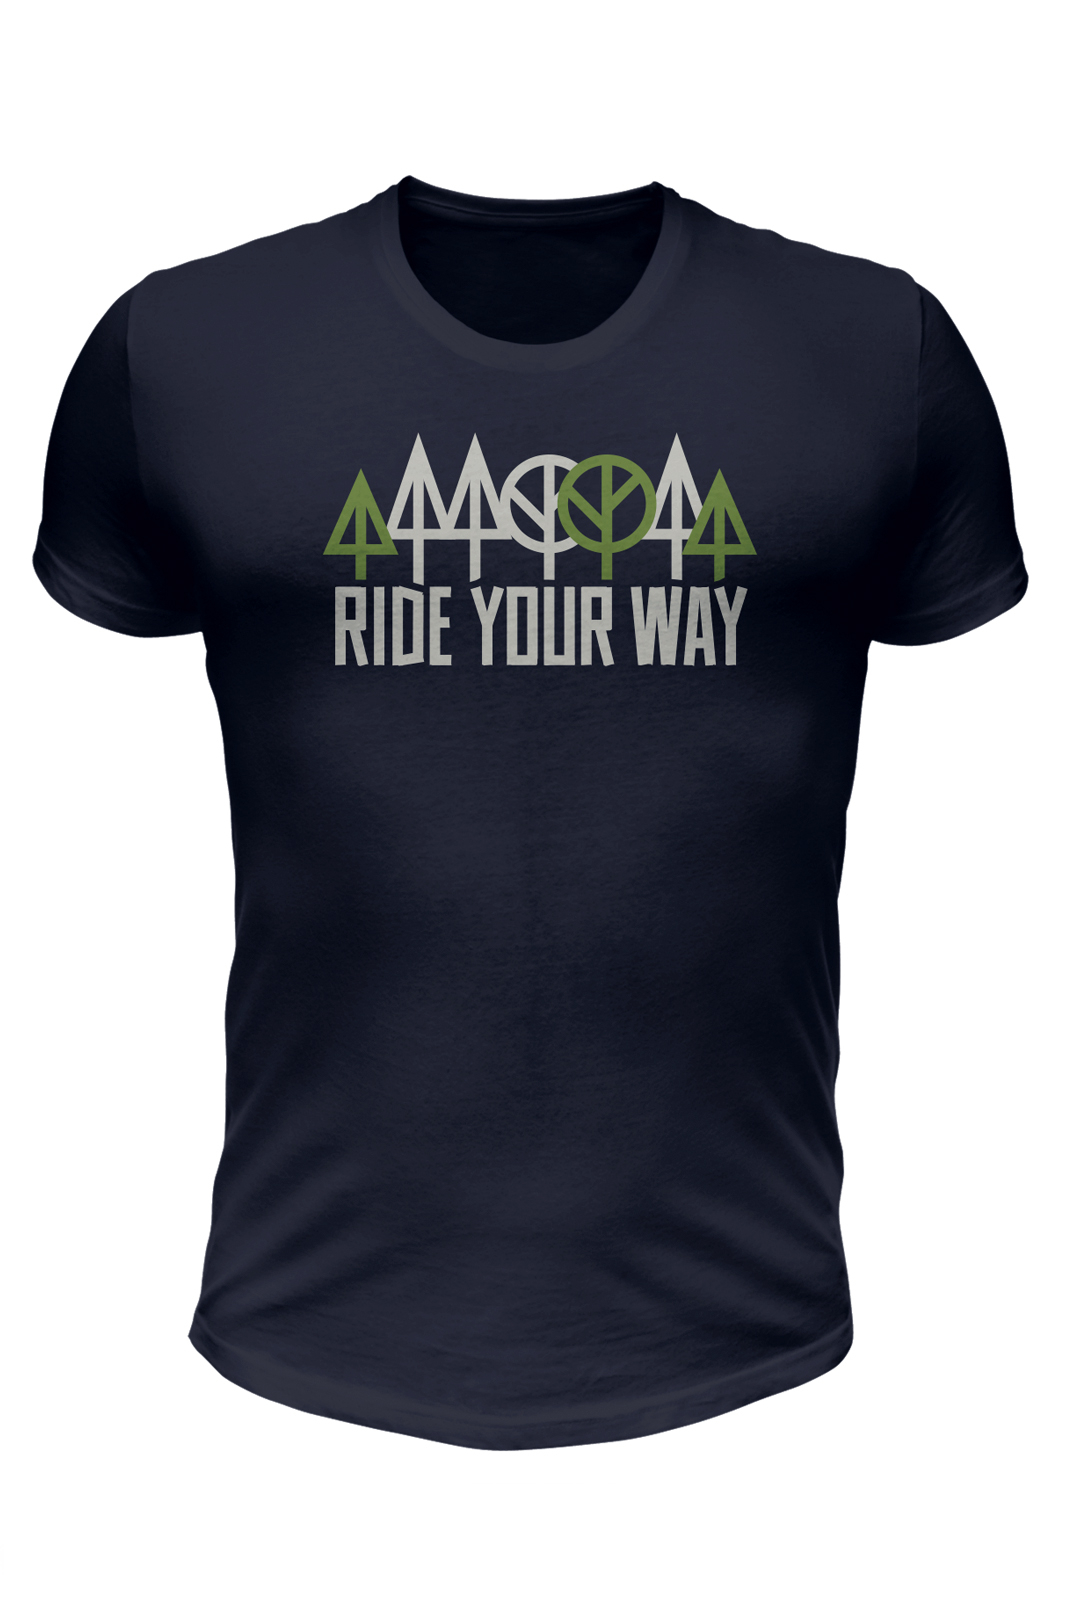 Dartmoor tričko Ride Your Way - graphite - velikost M